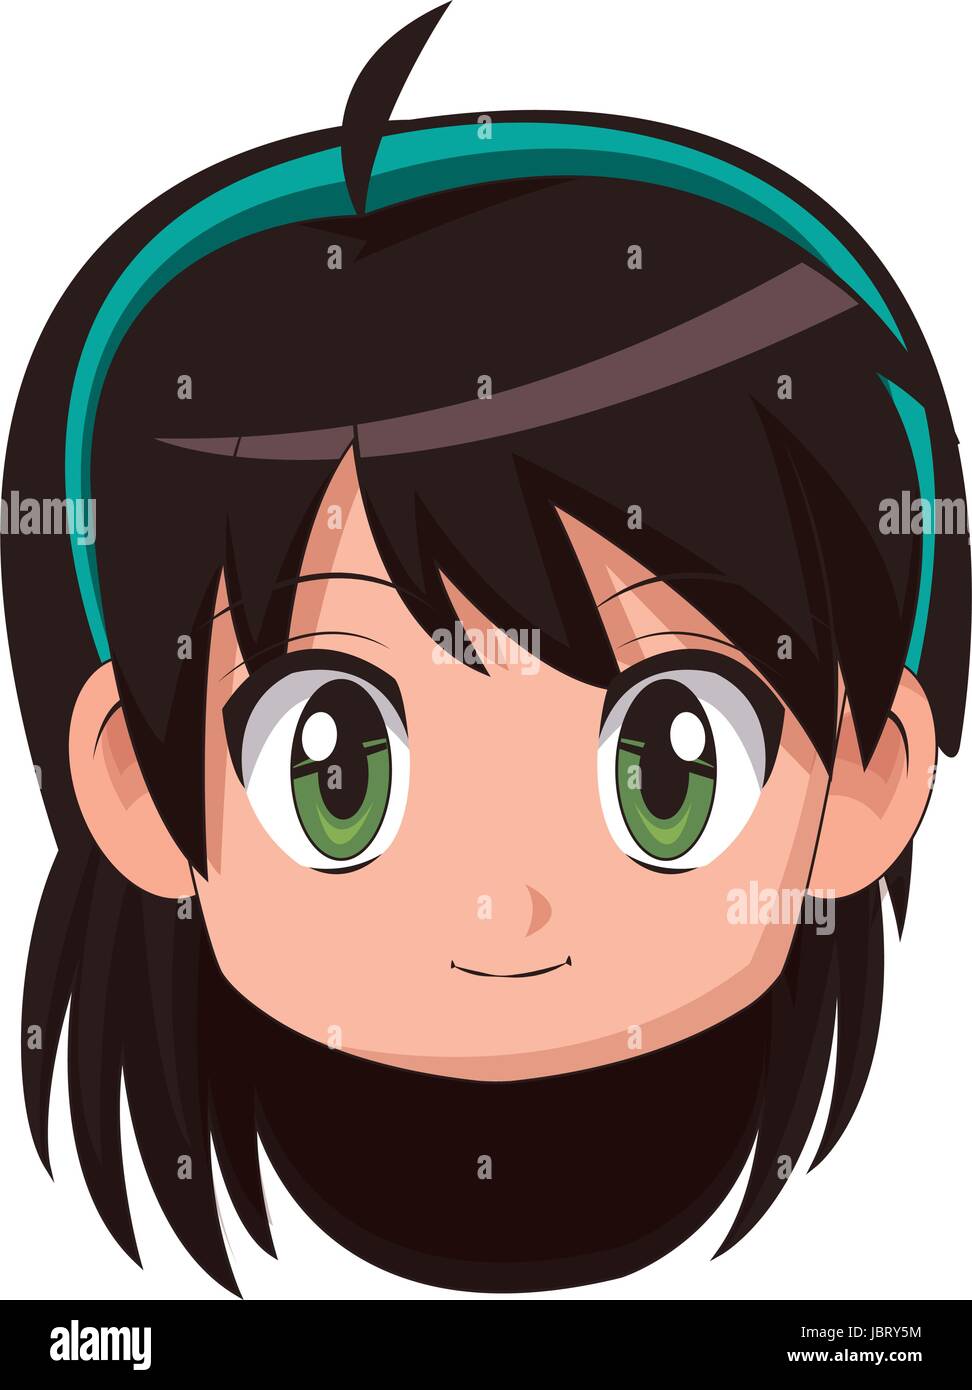 Cute Cartoon Anime Little Girl Chibi Character Stock Vector Image Art Alamy